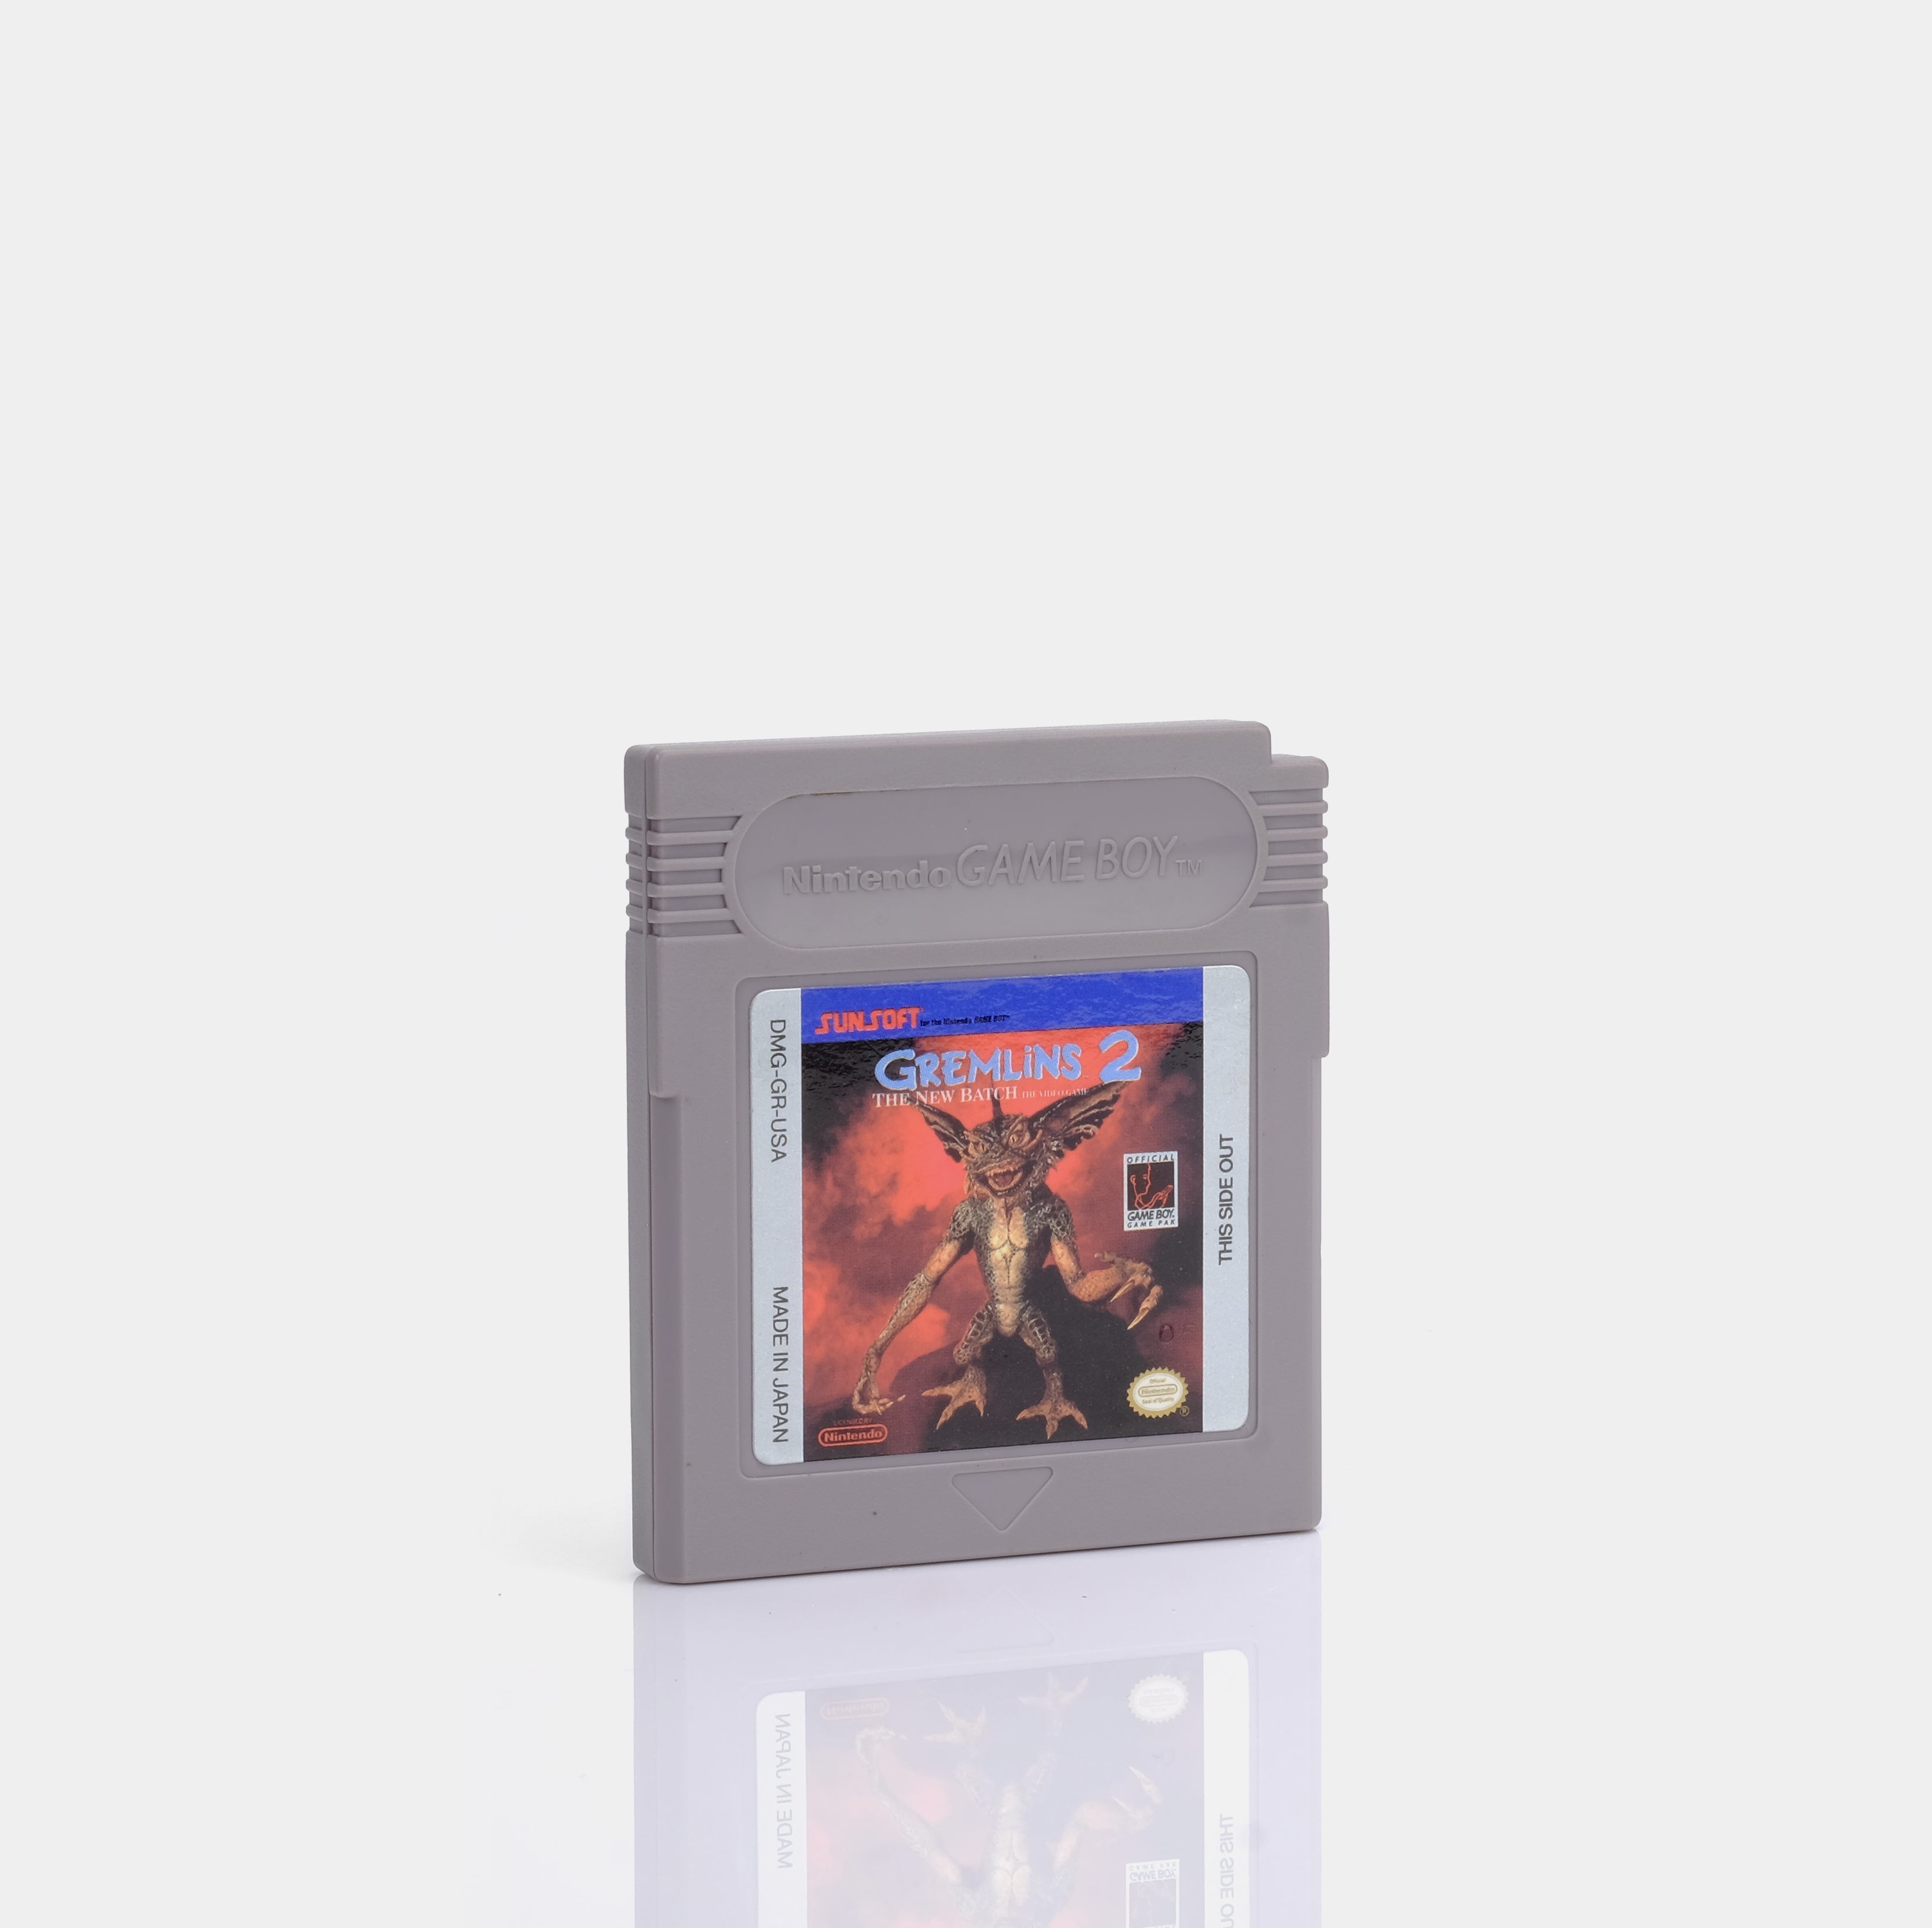 Gremlins 2 (1991) Game Boy Game